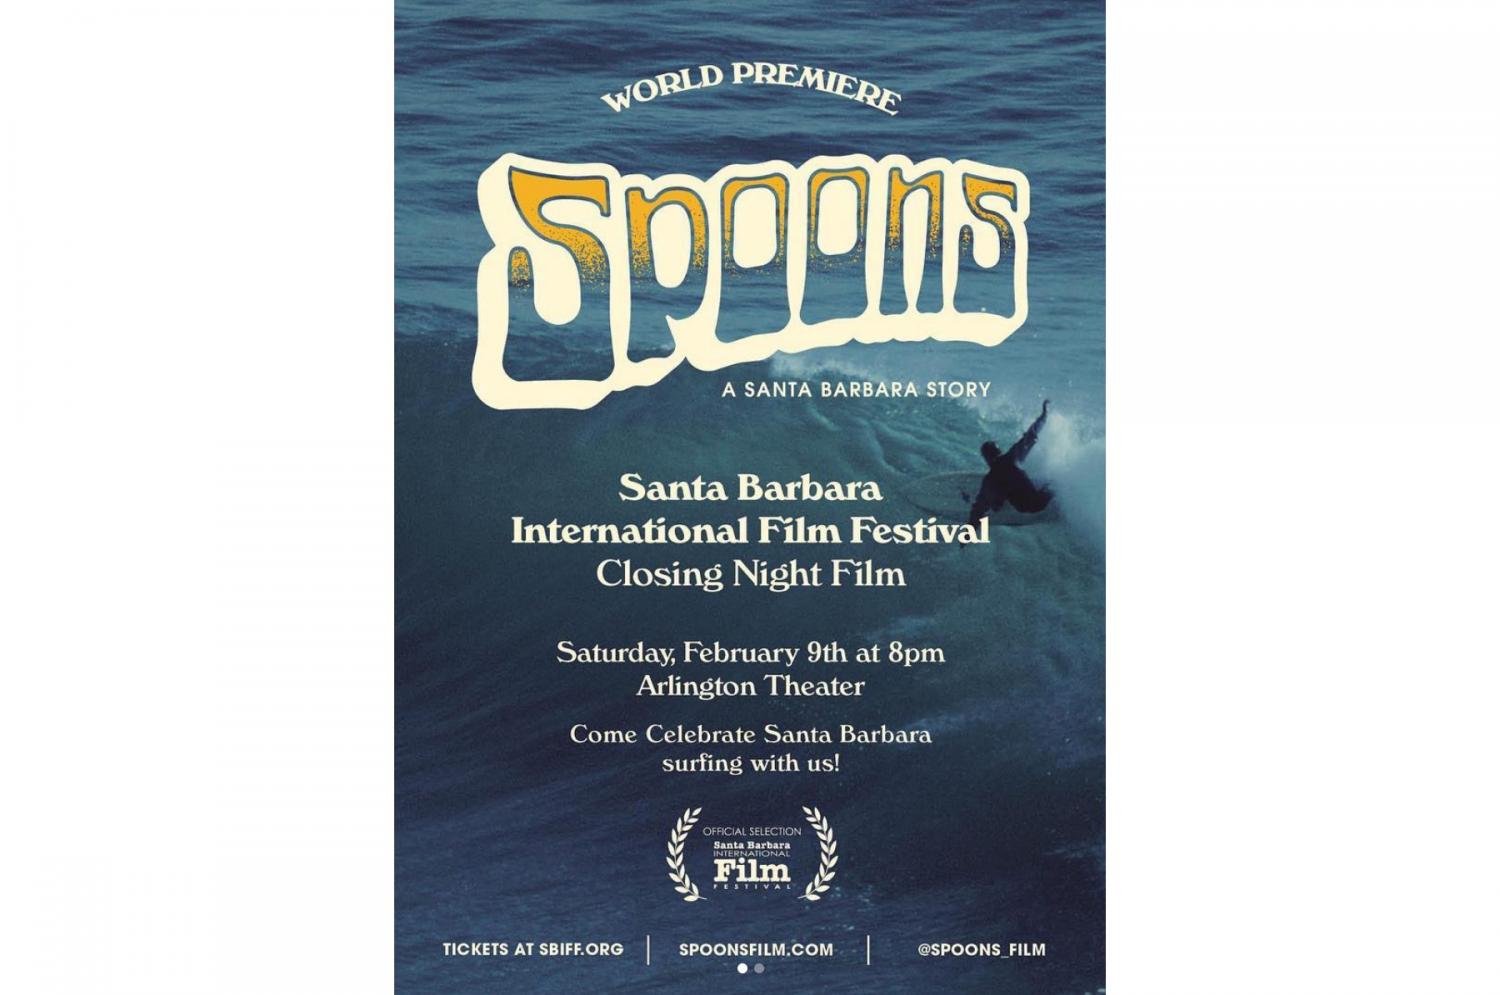 News of DVD "Spoons A Santa Barbara Story" arrival